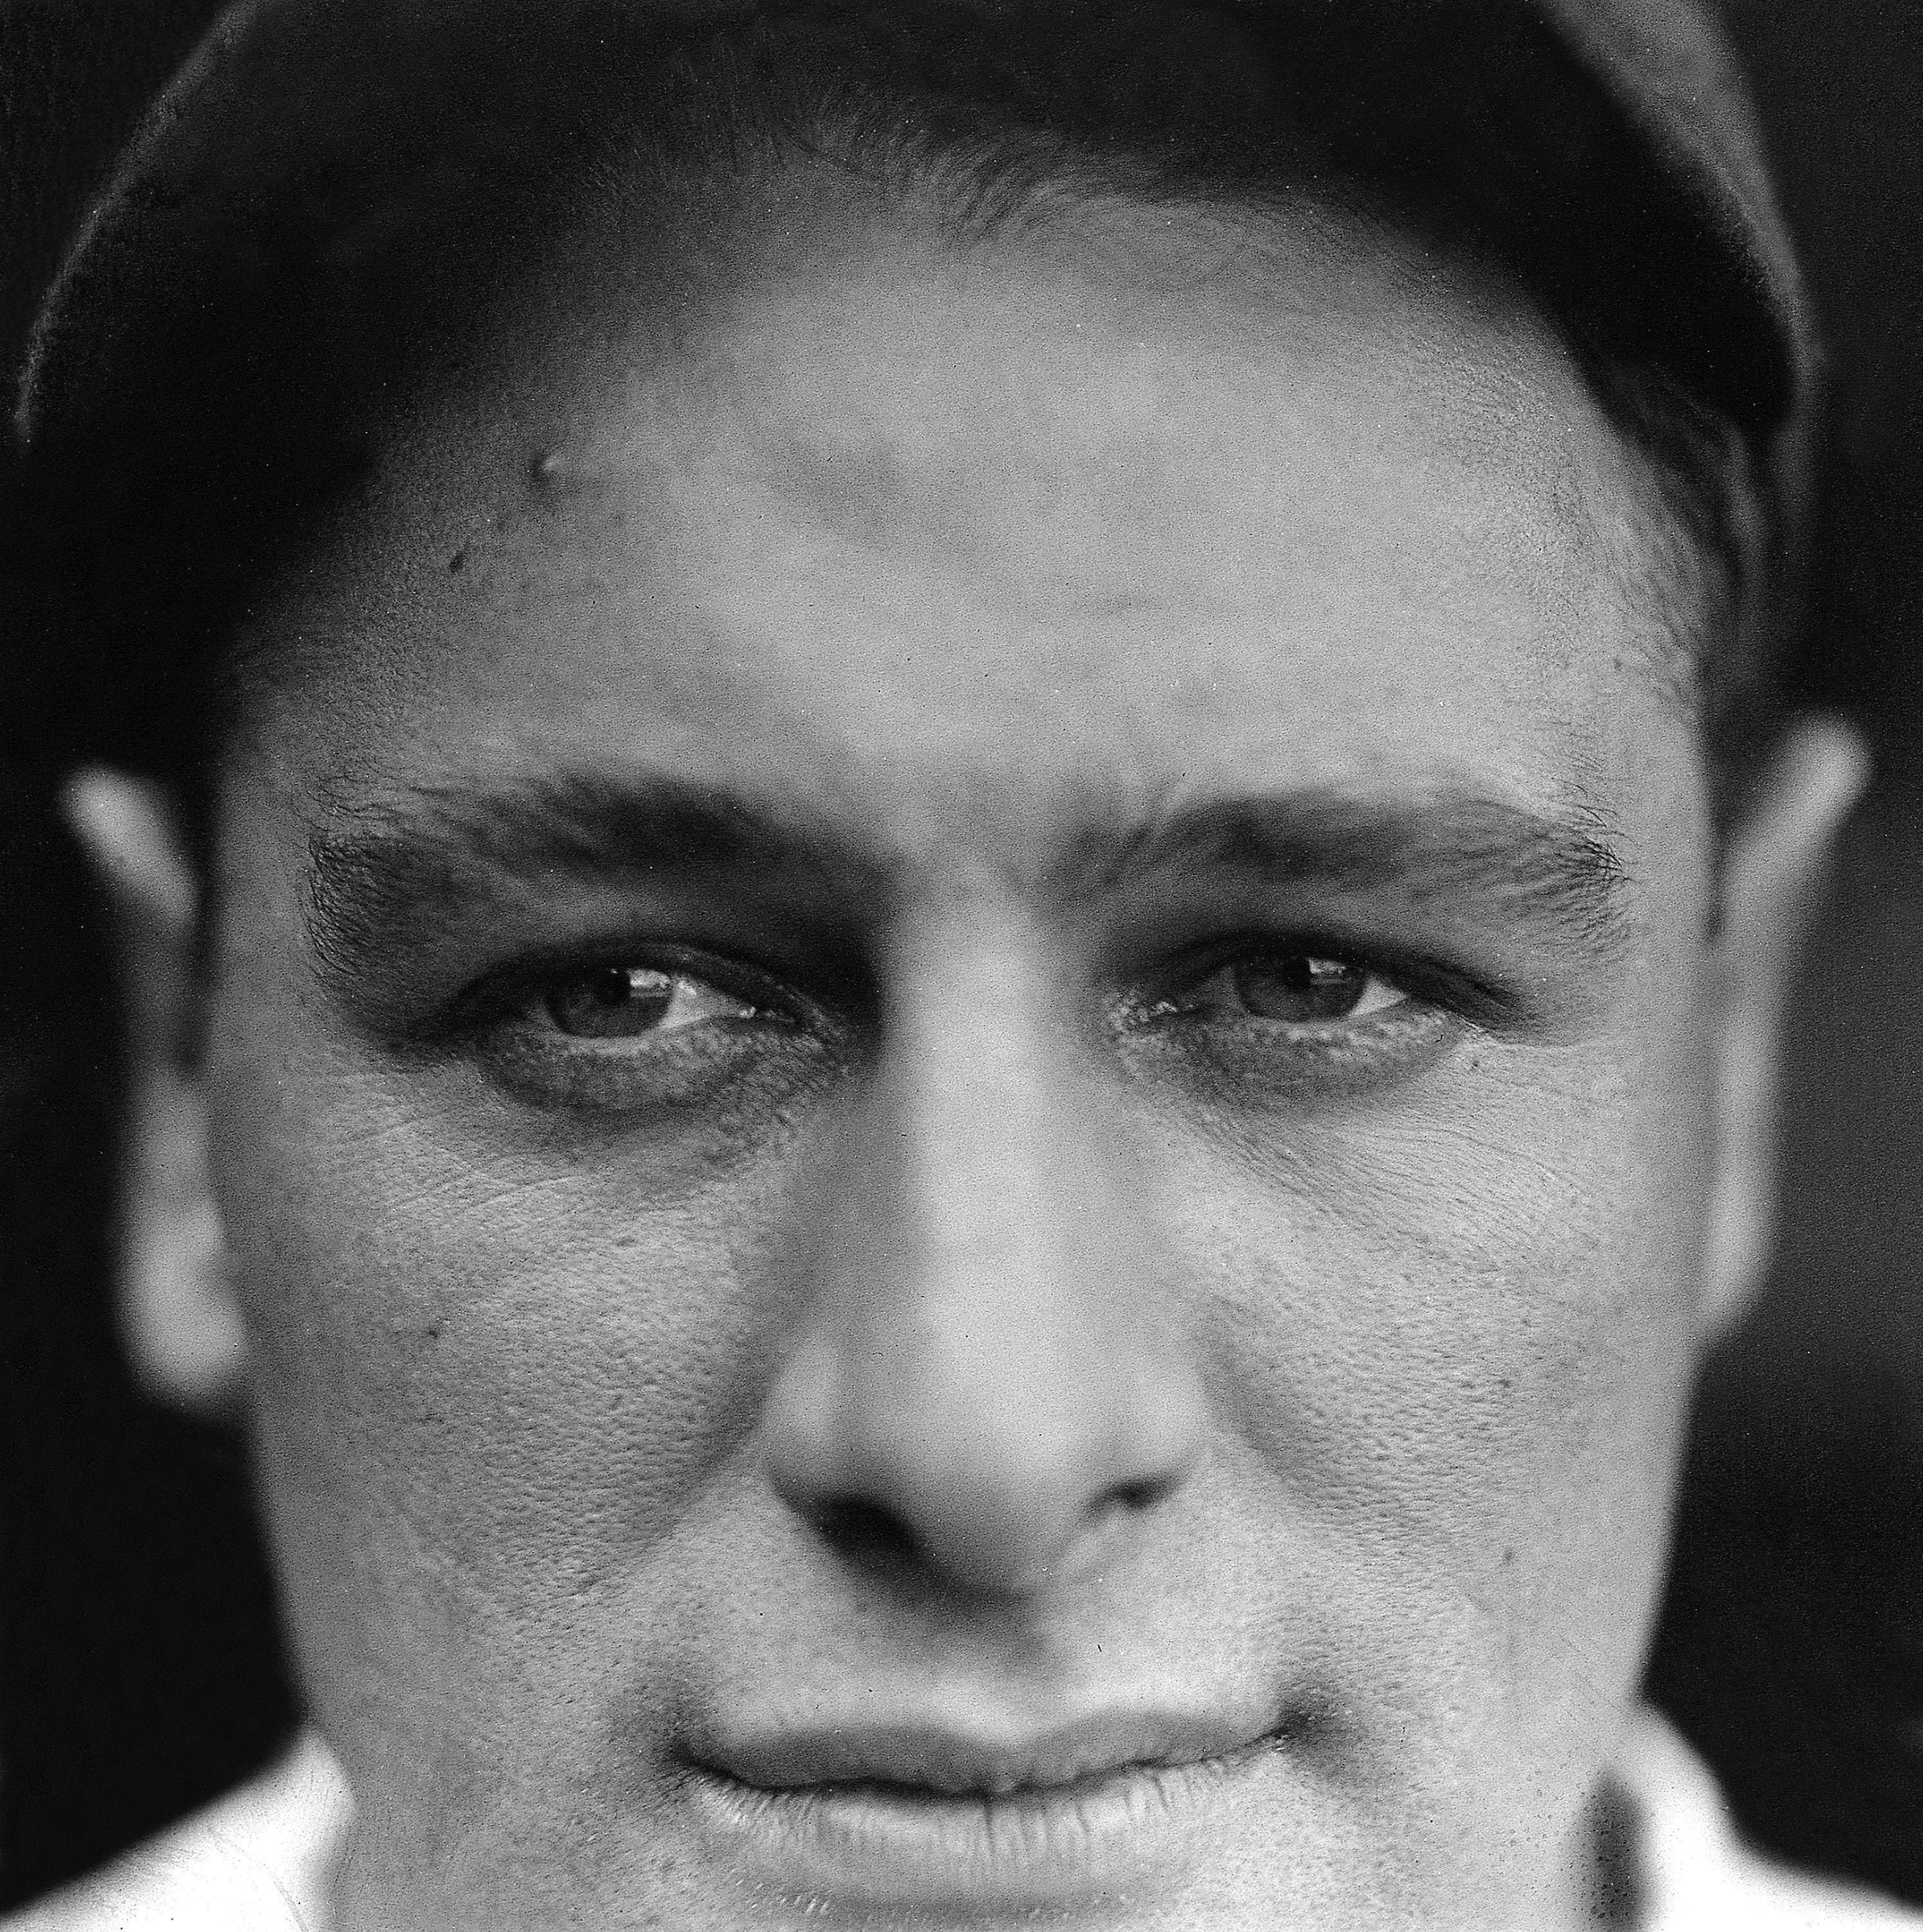 Portrait of Lou Gehrig T-Shirt